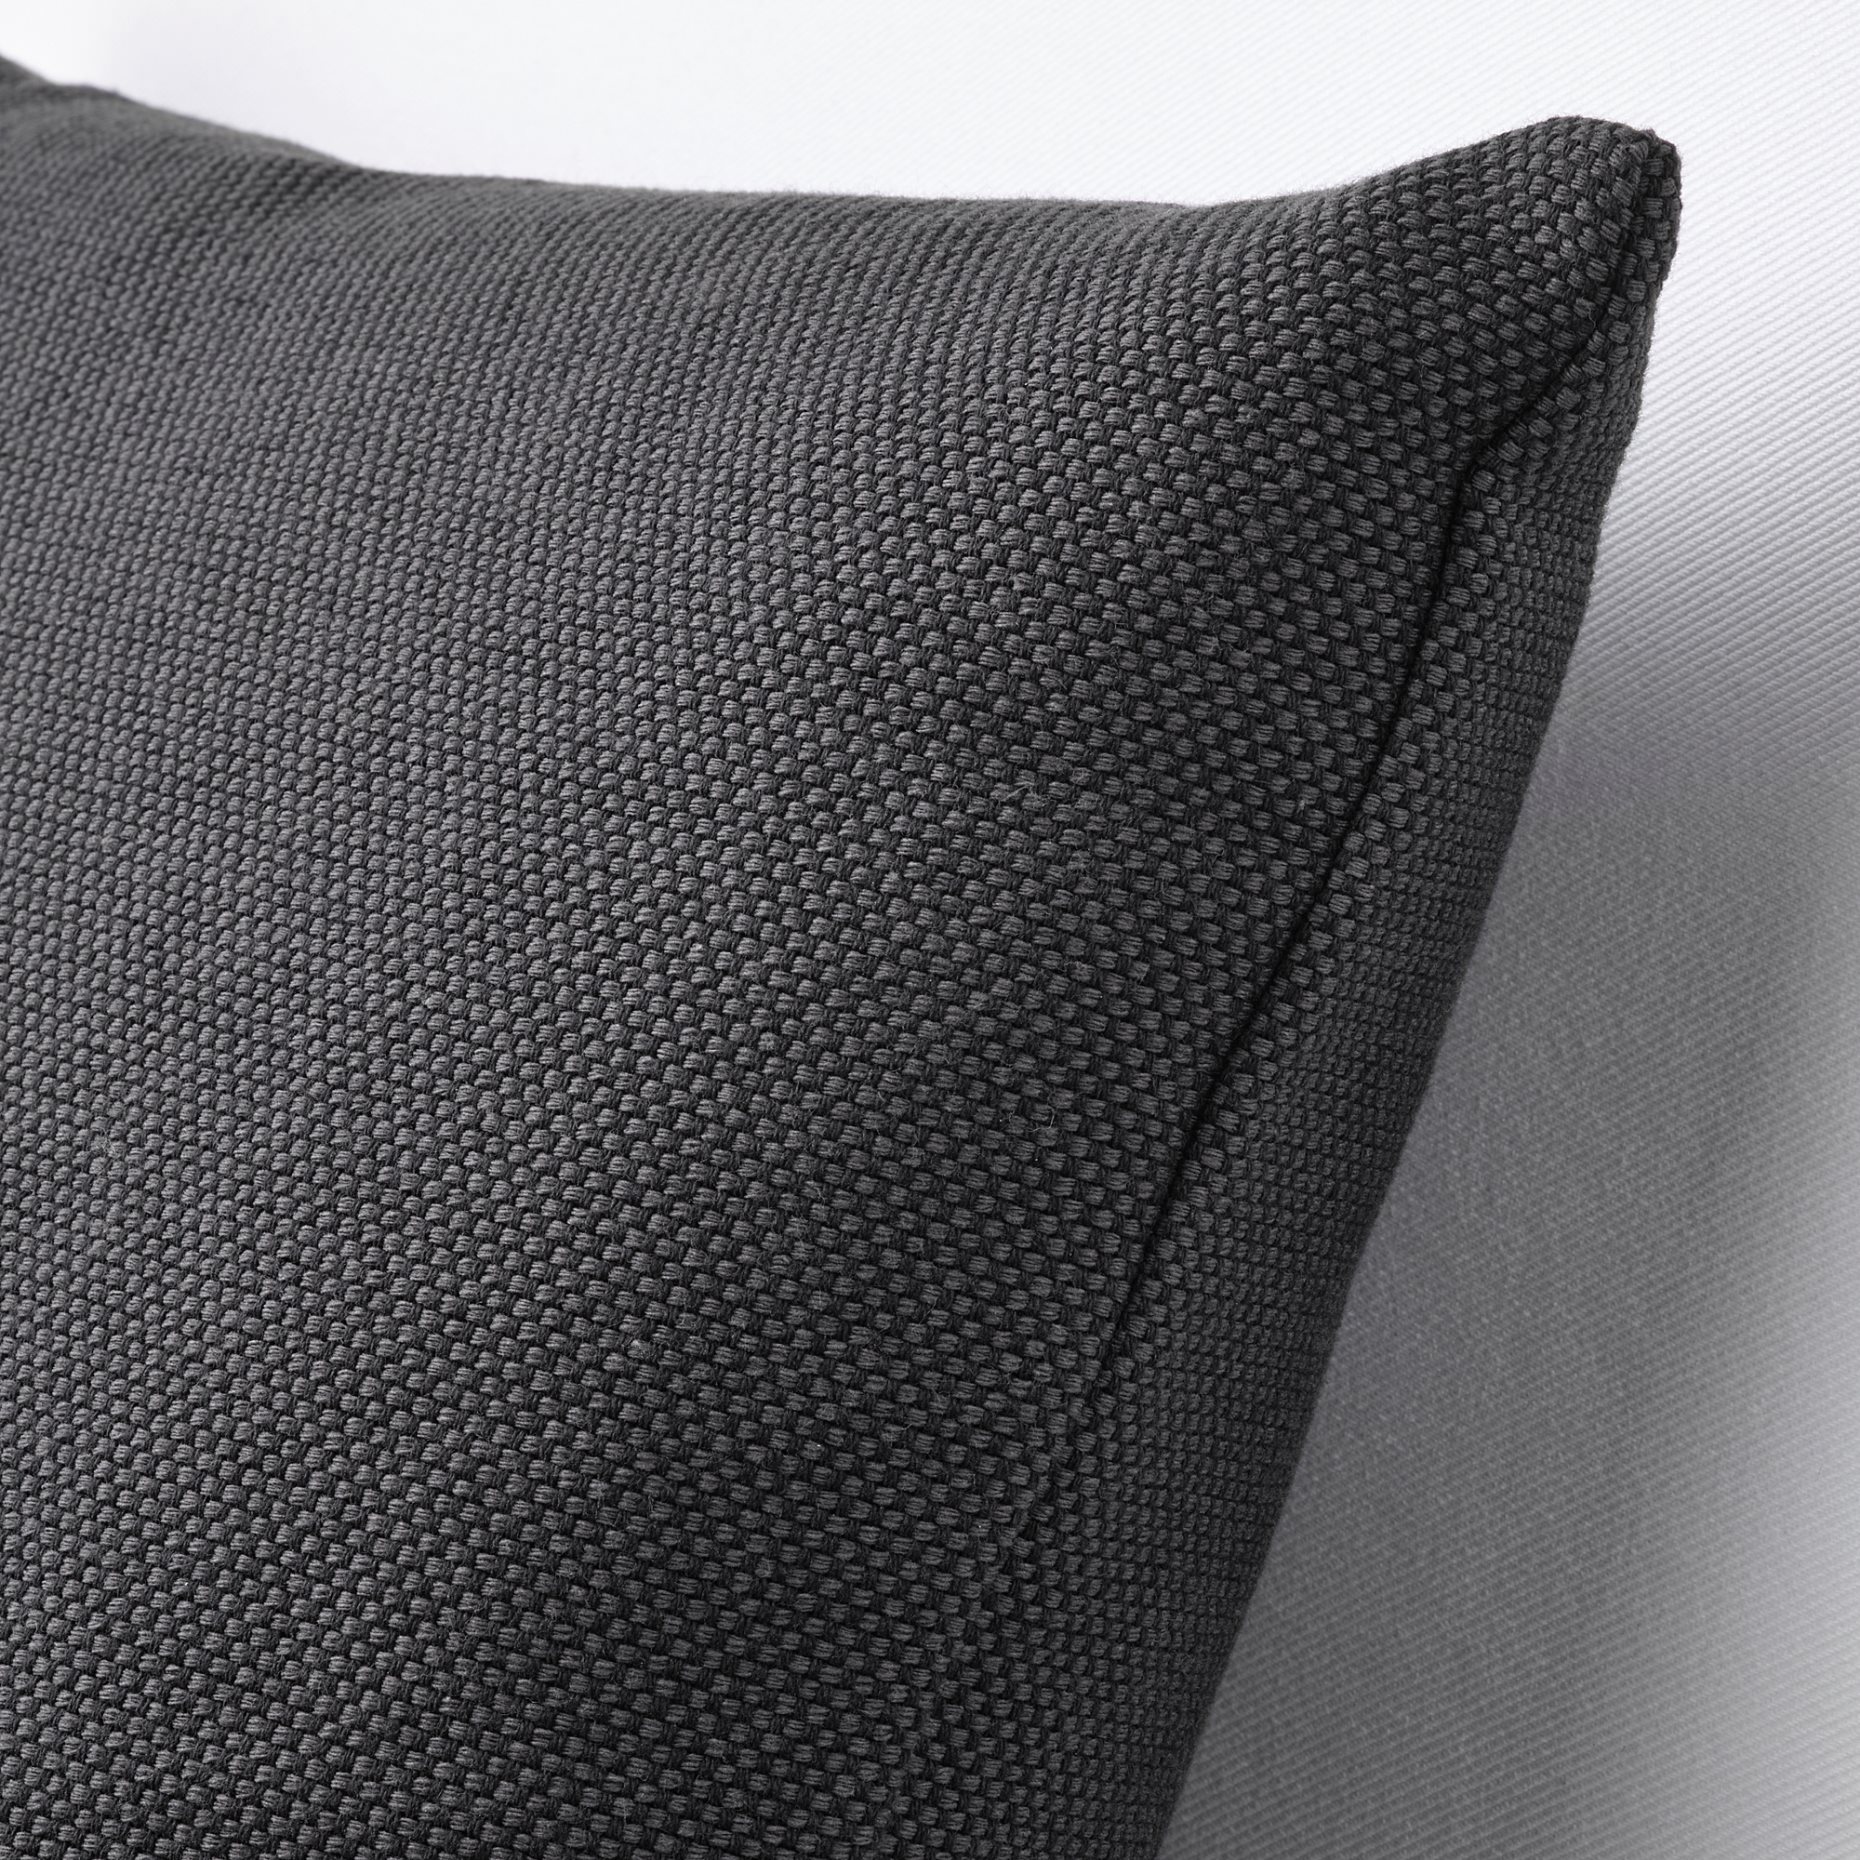 SANDTRAV, cushion, 45x45 cm, 505.107.06